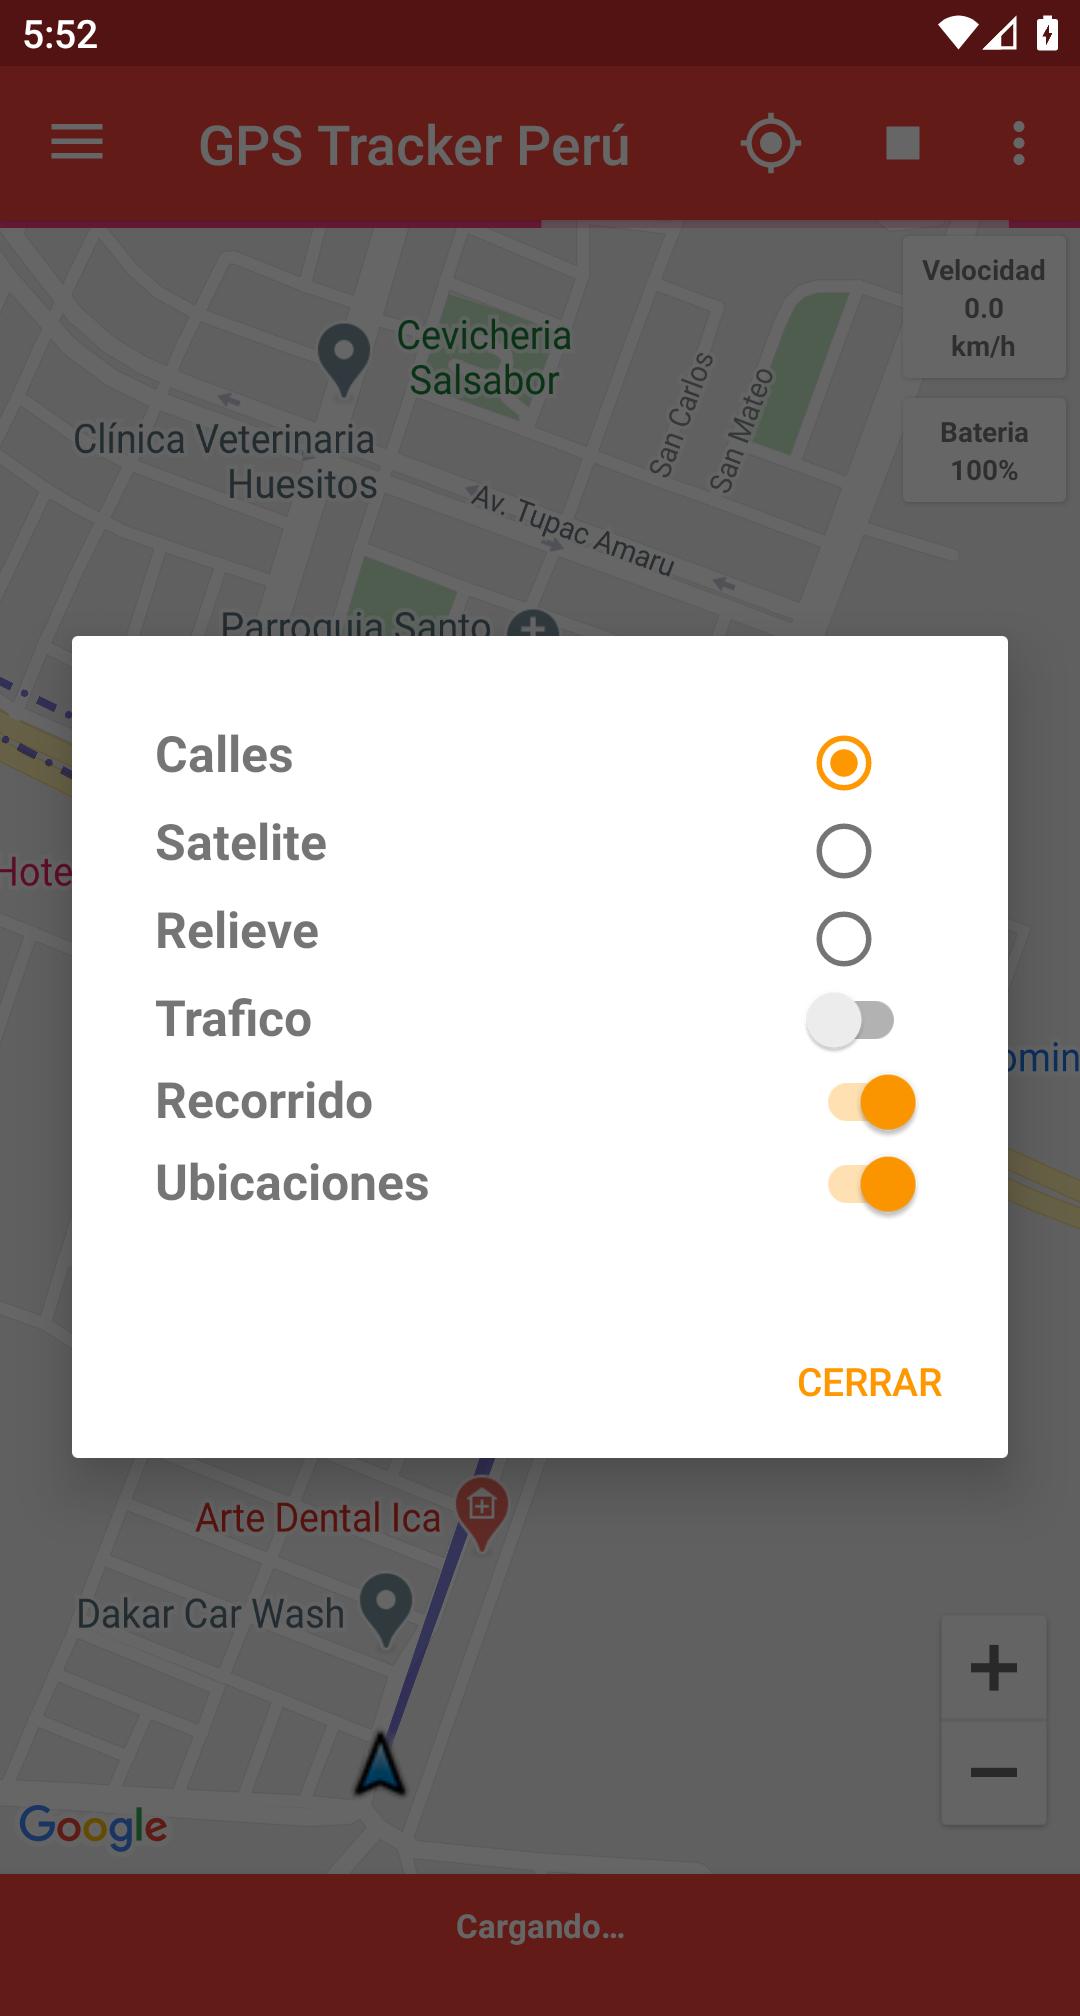 GPS Tracker Perú 2.04 Screenshot 5